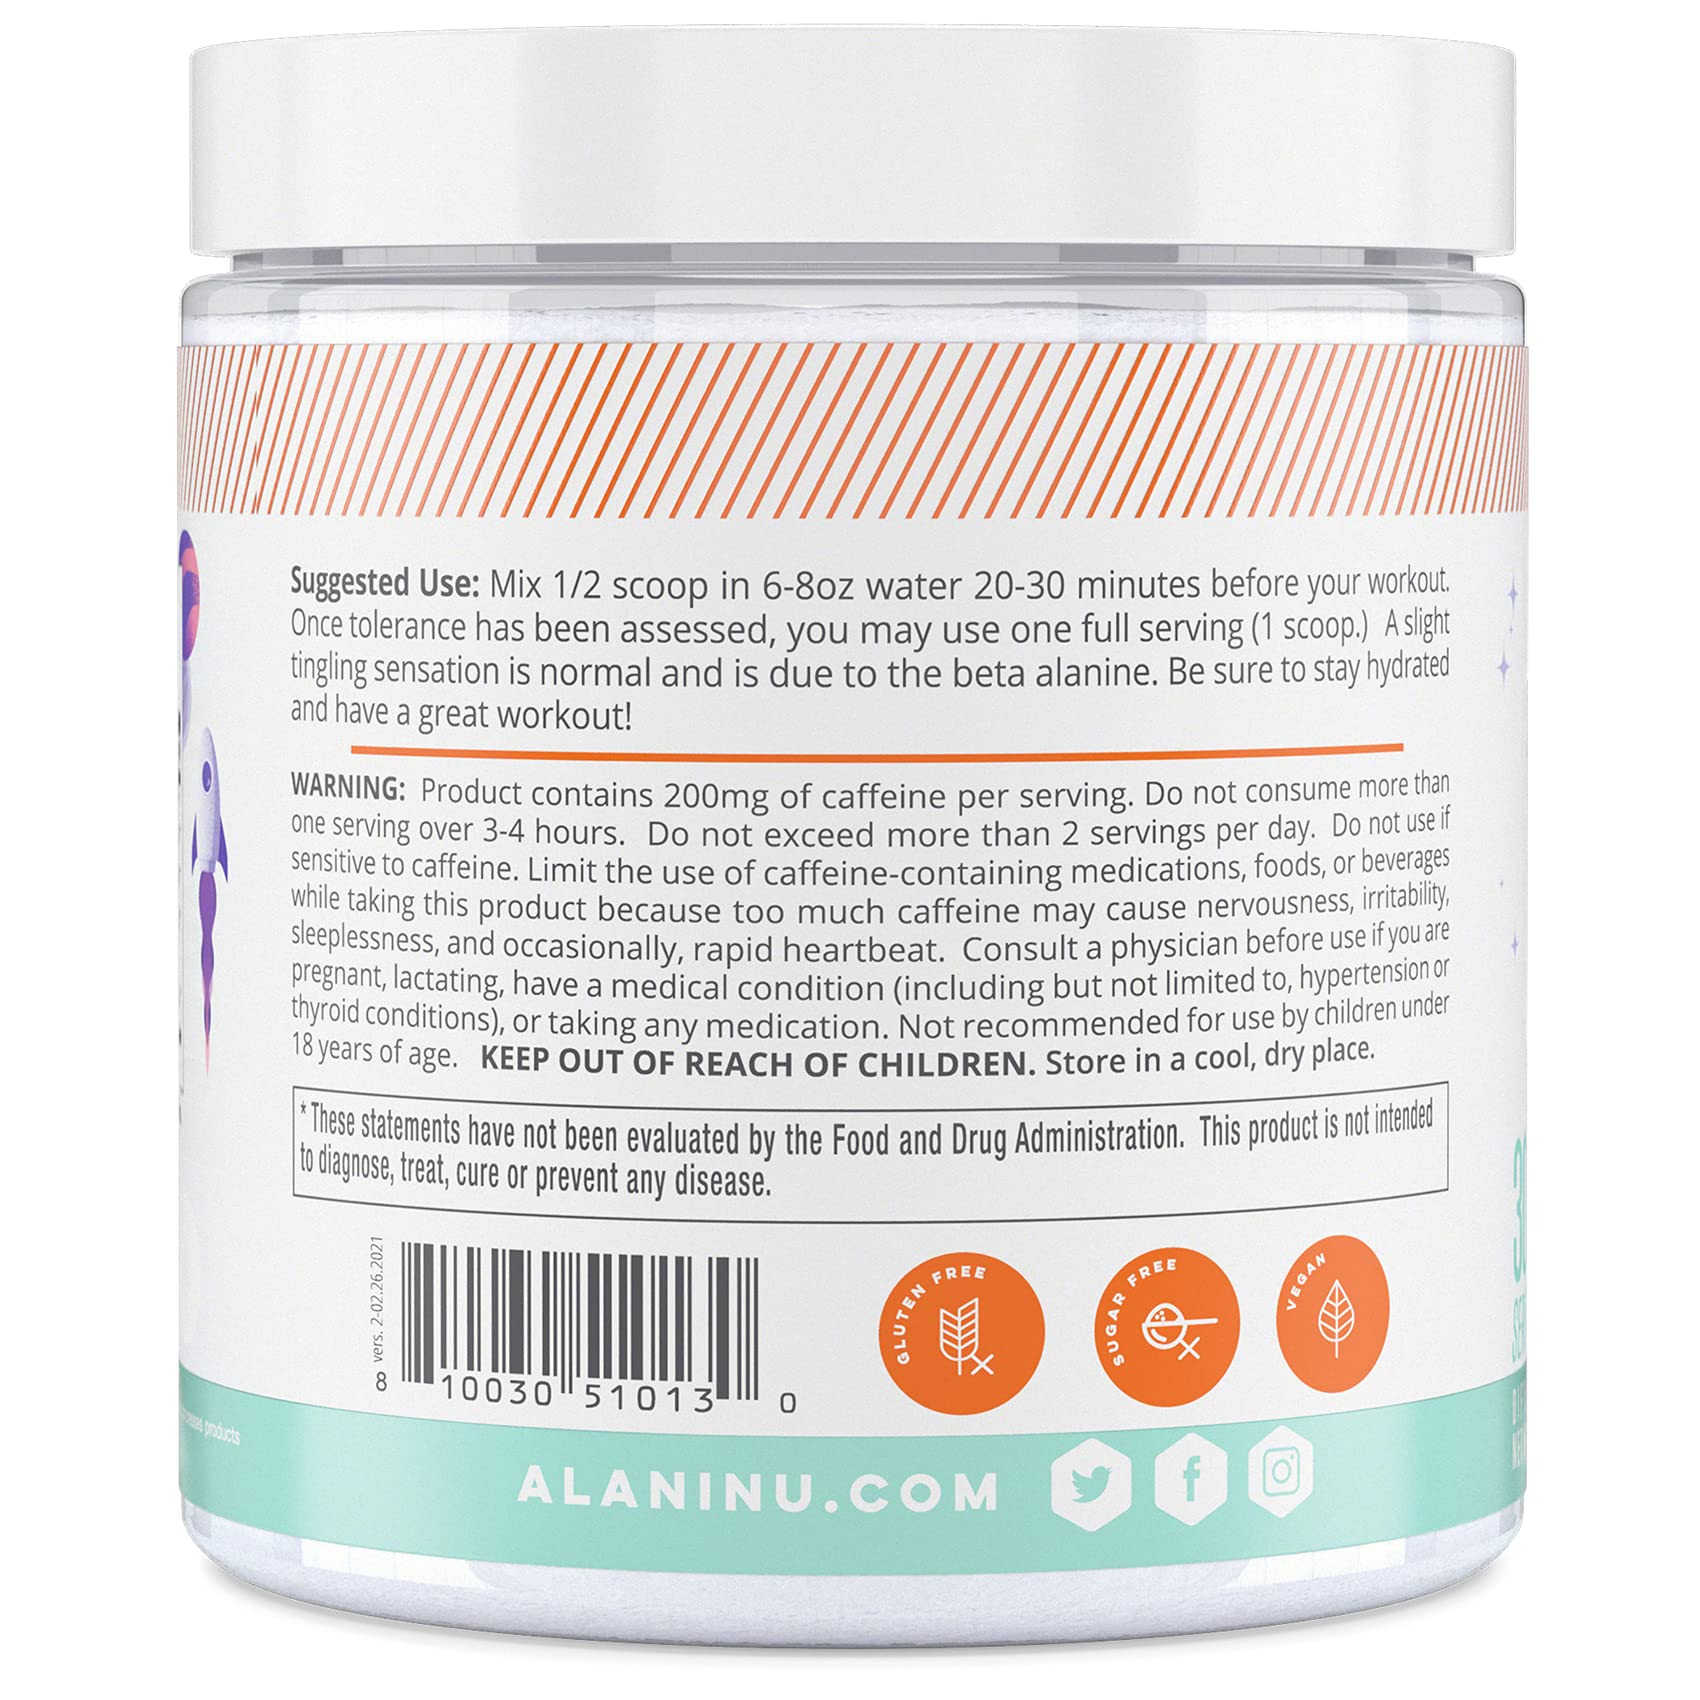 Alani Nu Creatine Monohydrate Powder and Pre Workout Galaxy Lemonade Powder Bundle | Sugar Free | 30 Servings Per Container